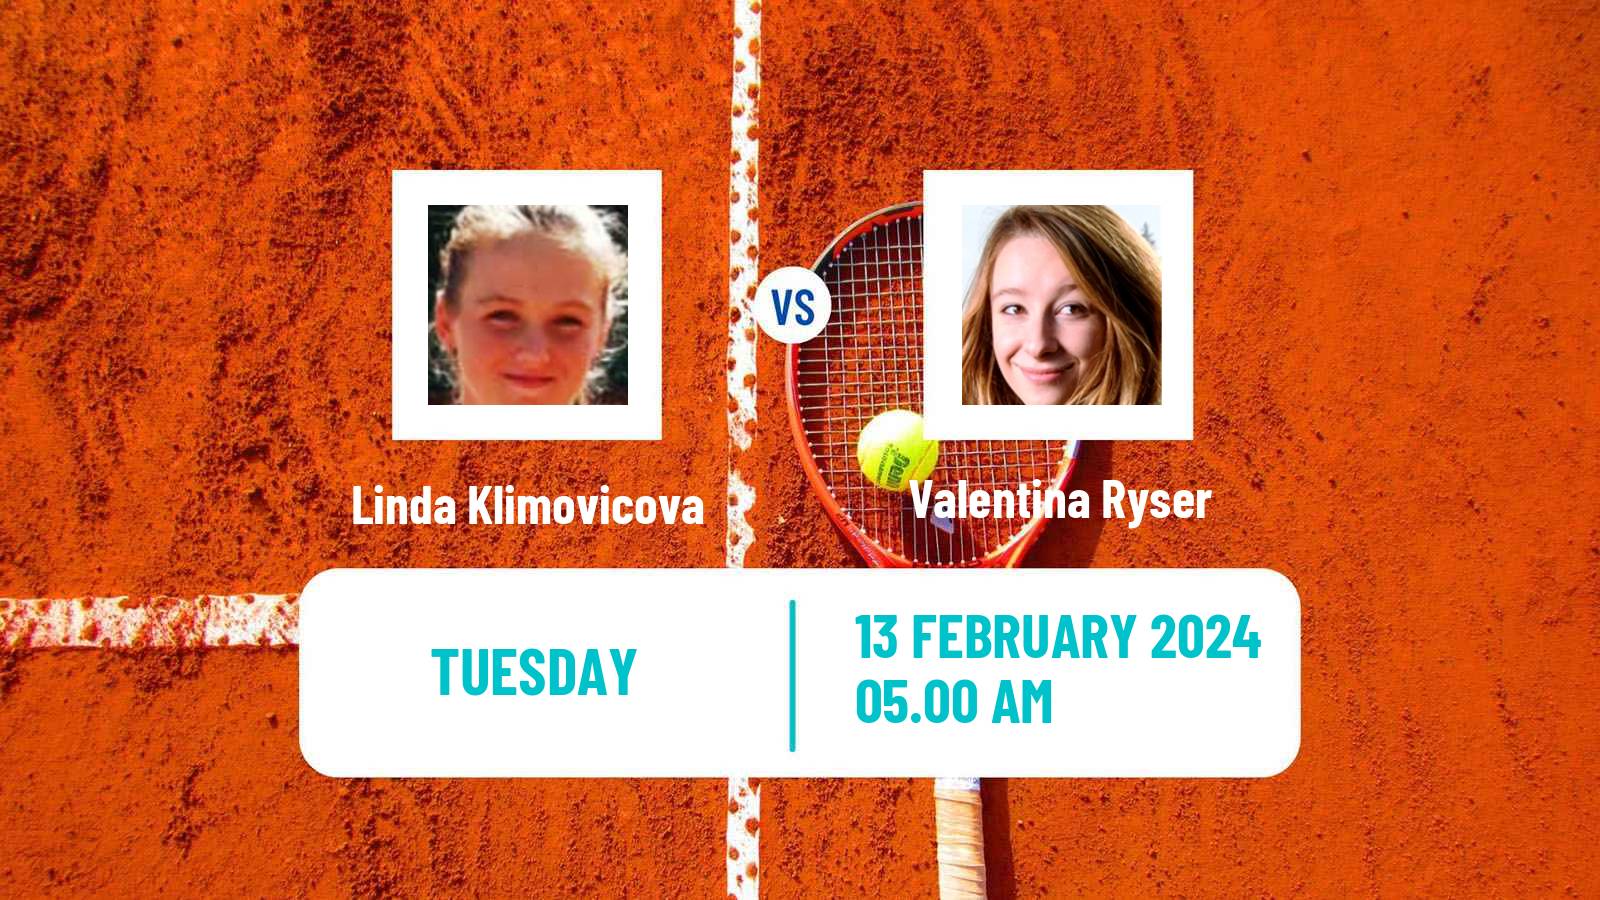 Tennis ITF W50 Roehampton Women Linda Klimovicova - Valentina Ryser